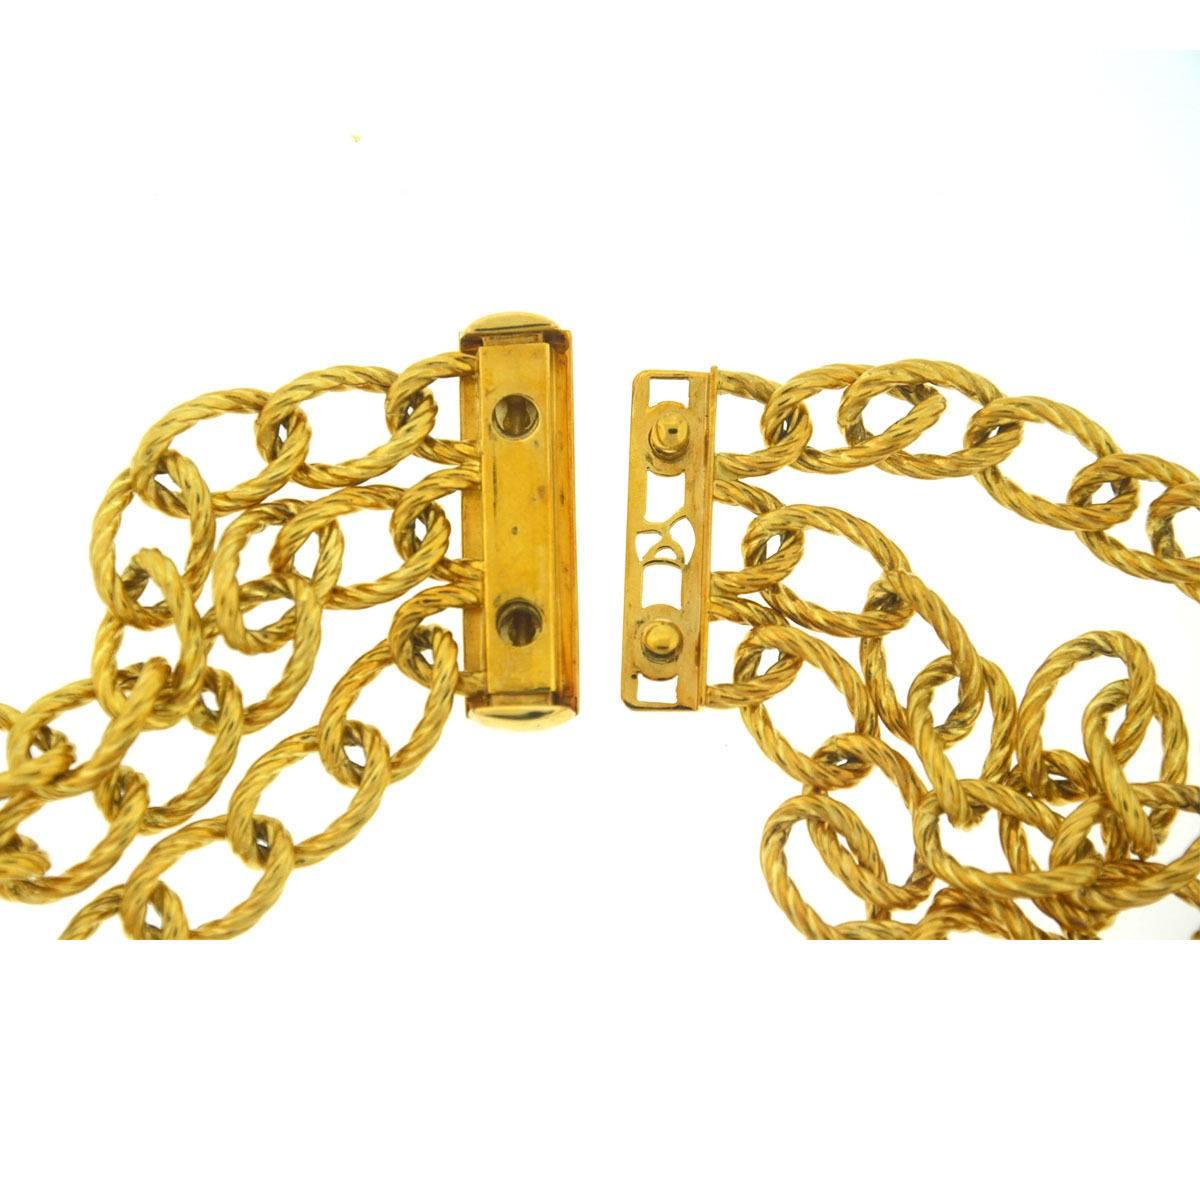 Company - David Yurman
Style - 3 Strand Twisted Oval Link Chain Necklace w/ Diamonds
Metal - 18k Gold
Length - 16